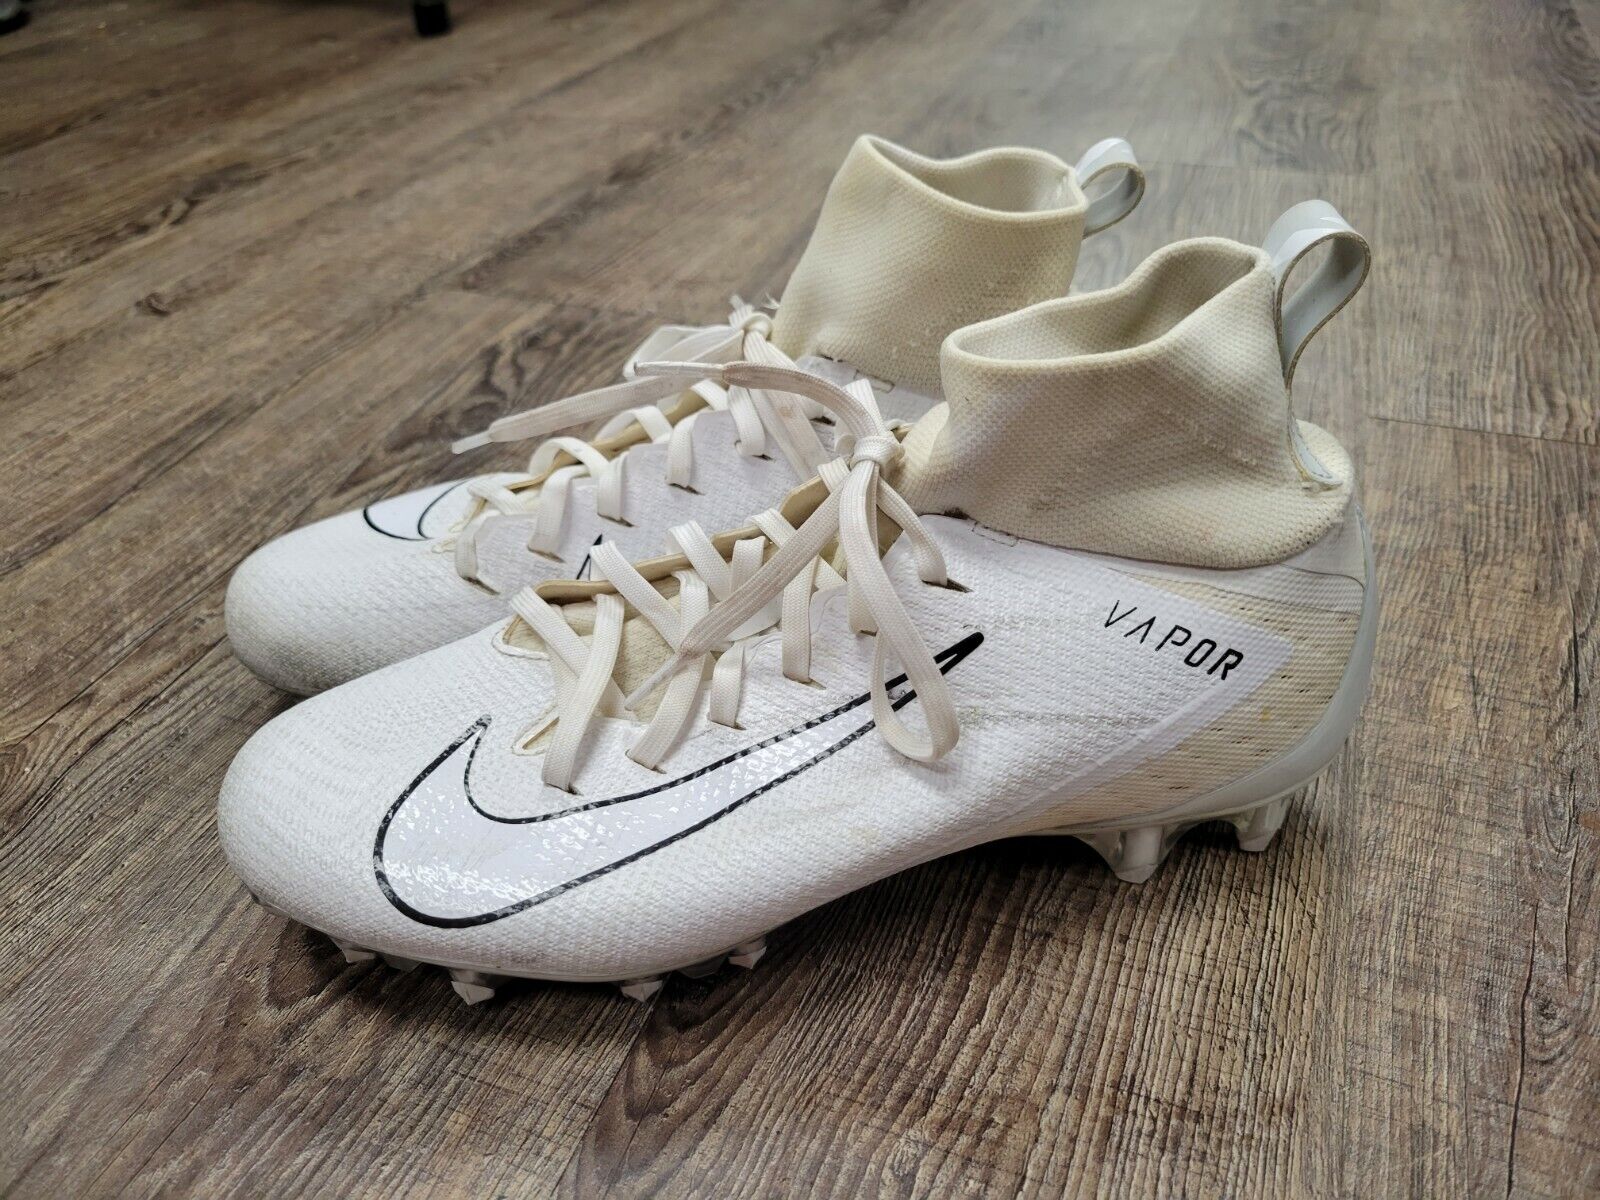 Nike Vapor Untouchable Pro 3 White Football Cleats 917165-120 Size 9.5